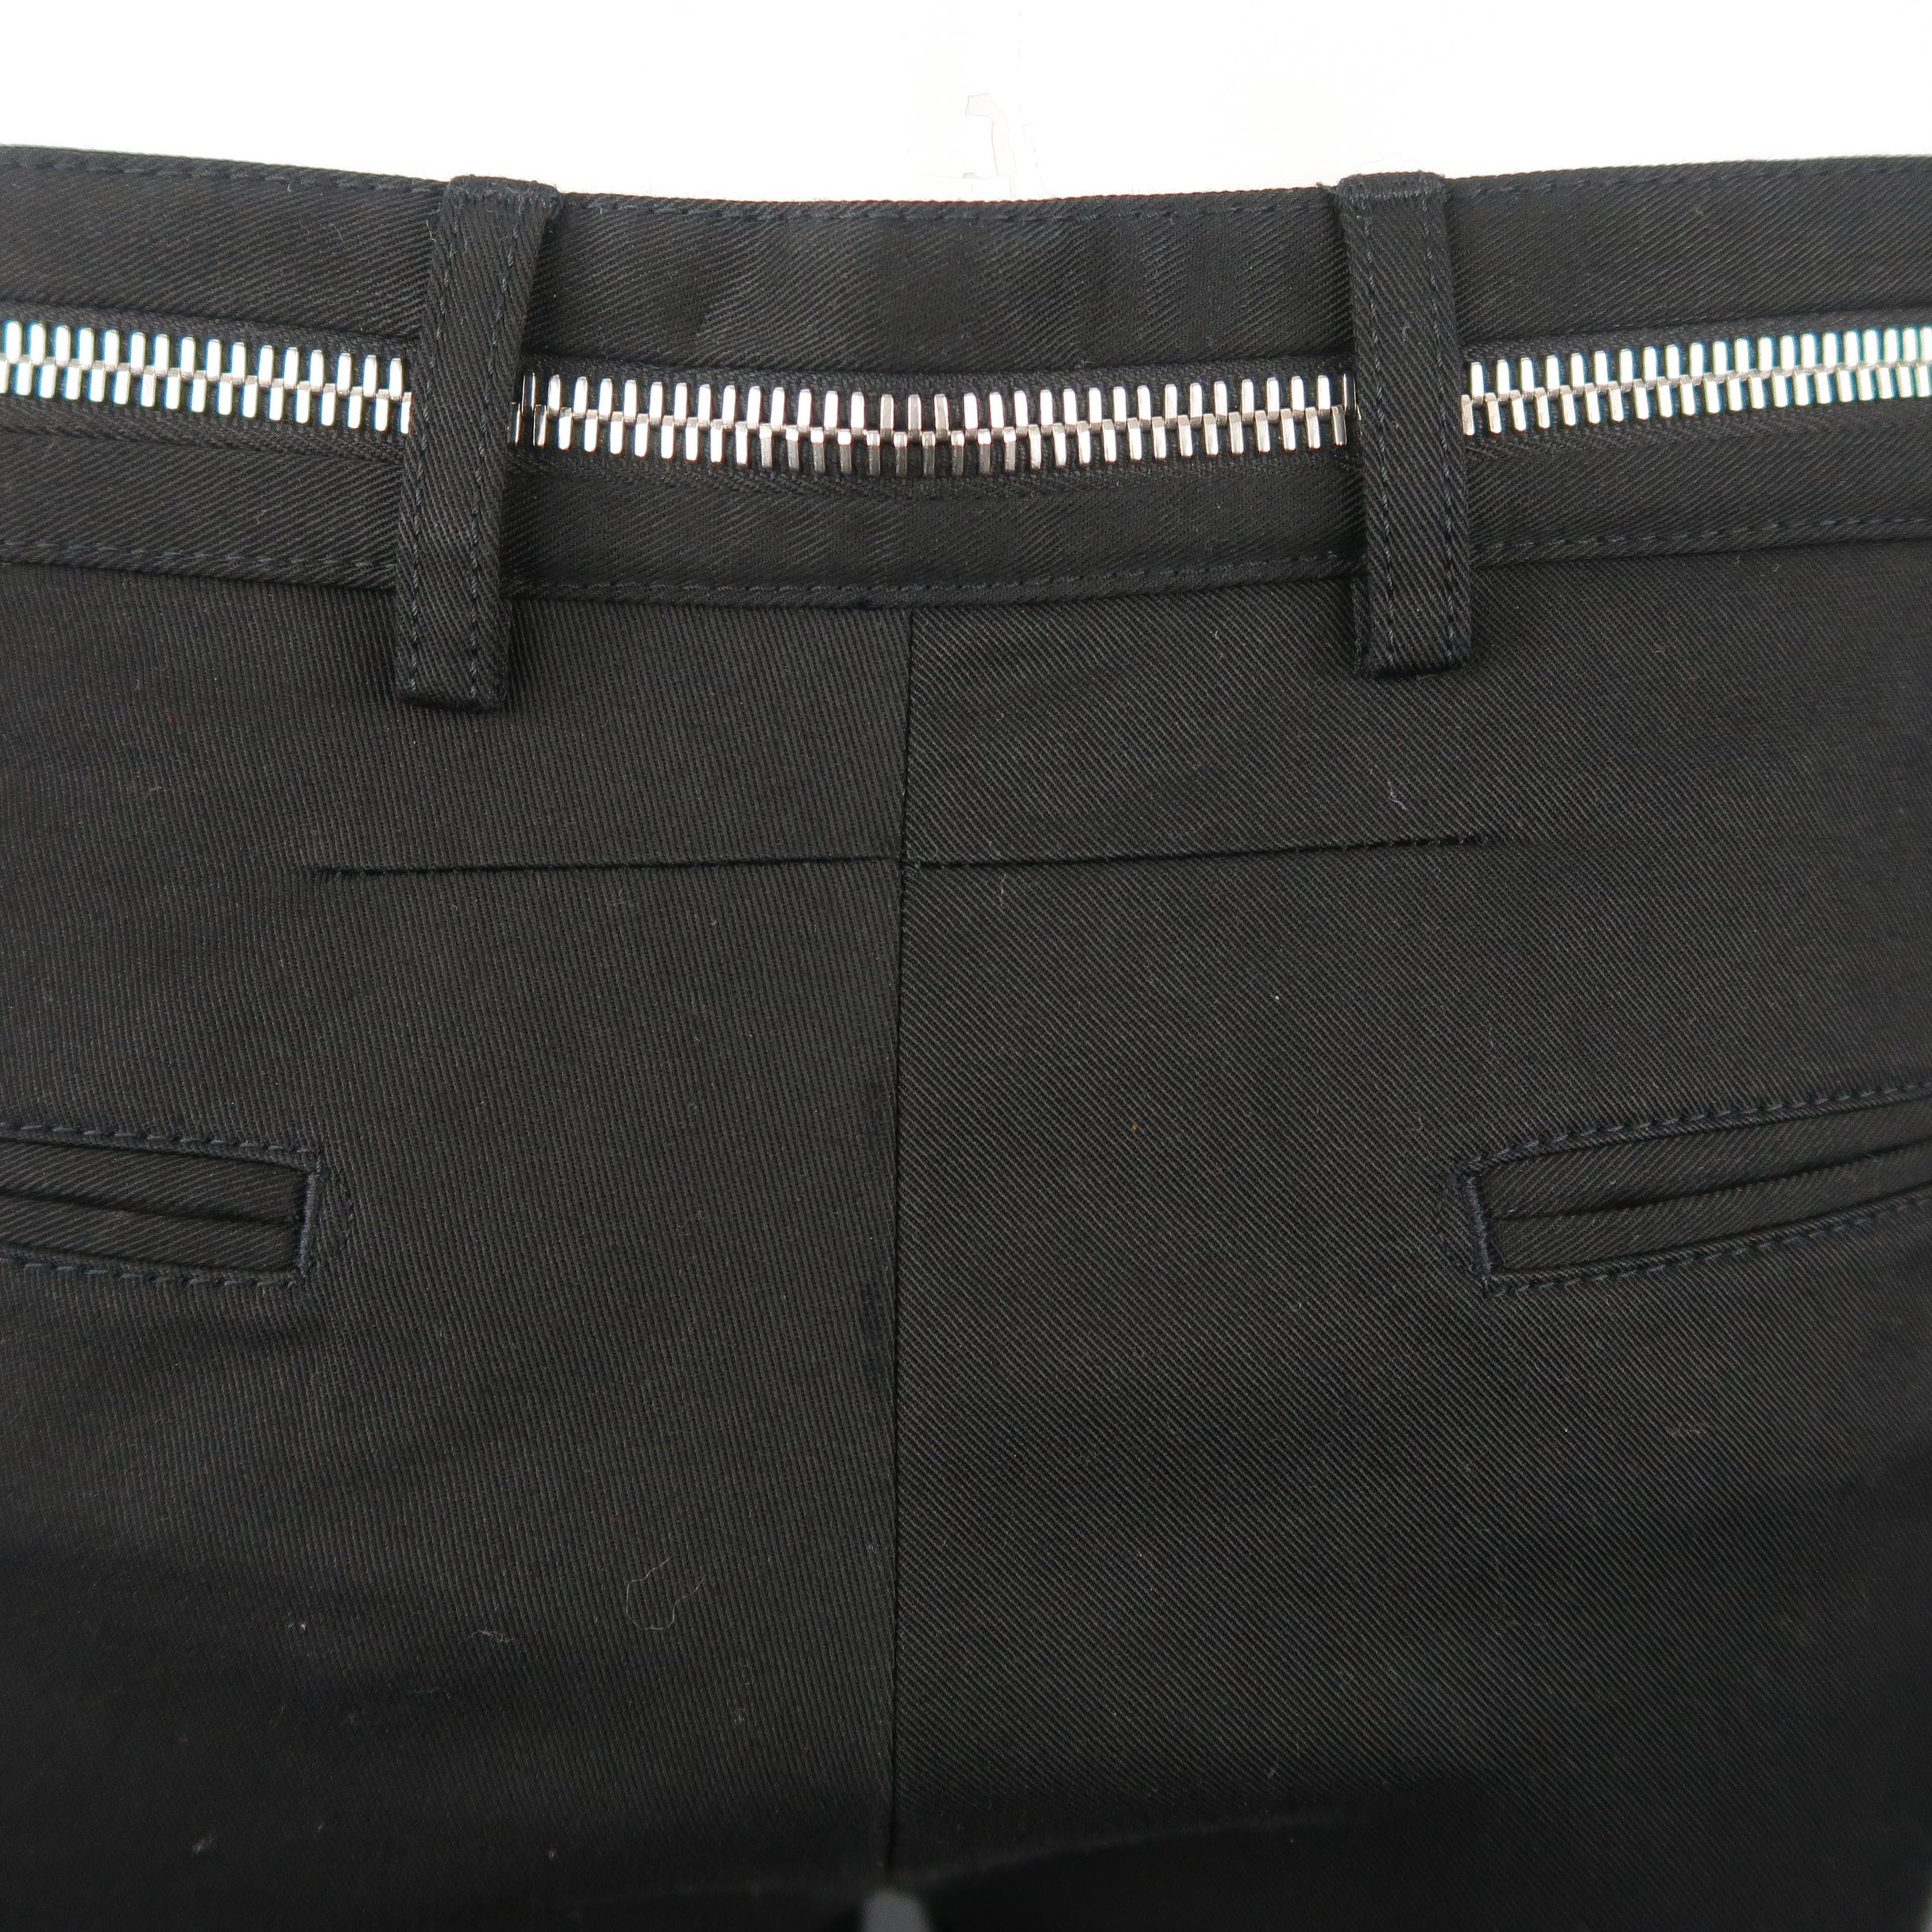 Men's GIVENCHY Size 34 Black Cotton Twill Zipper Waistband Dress Pants